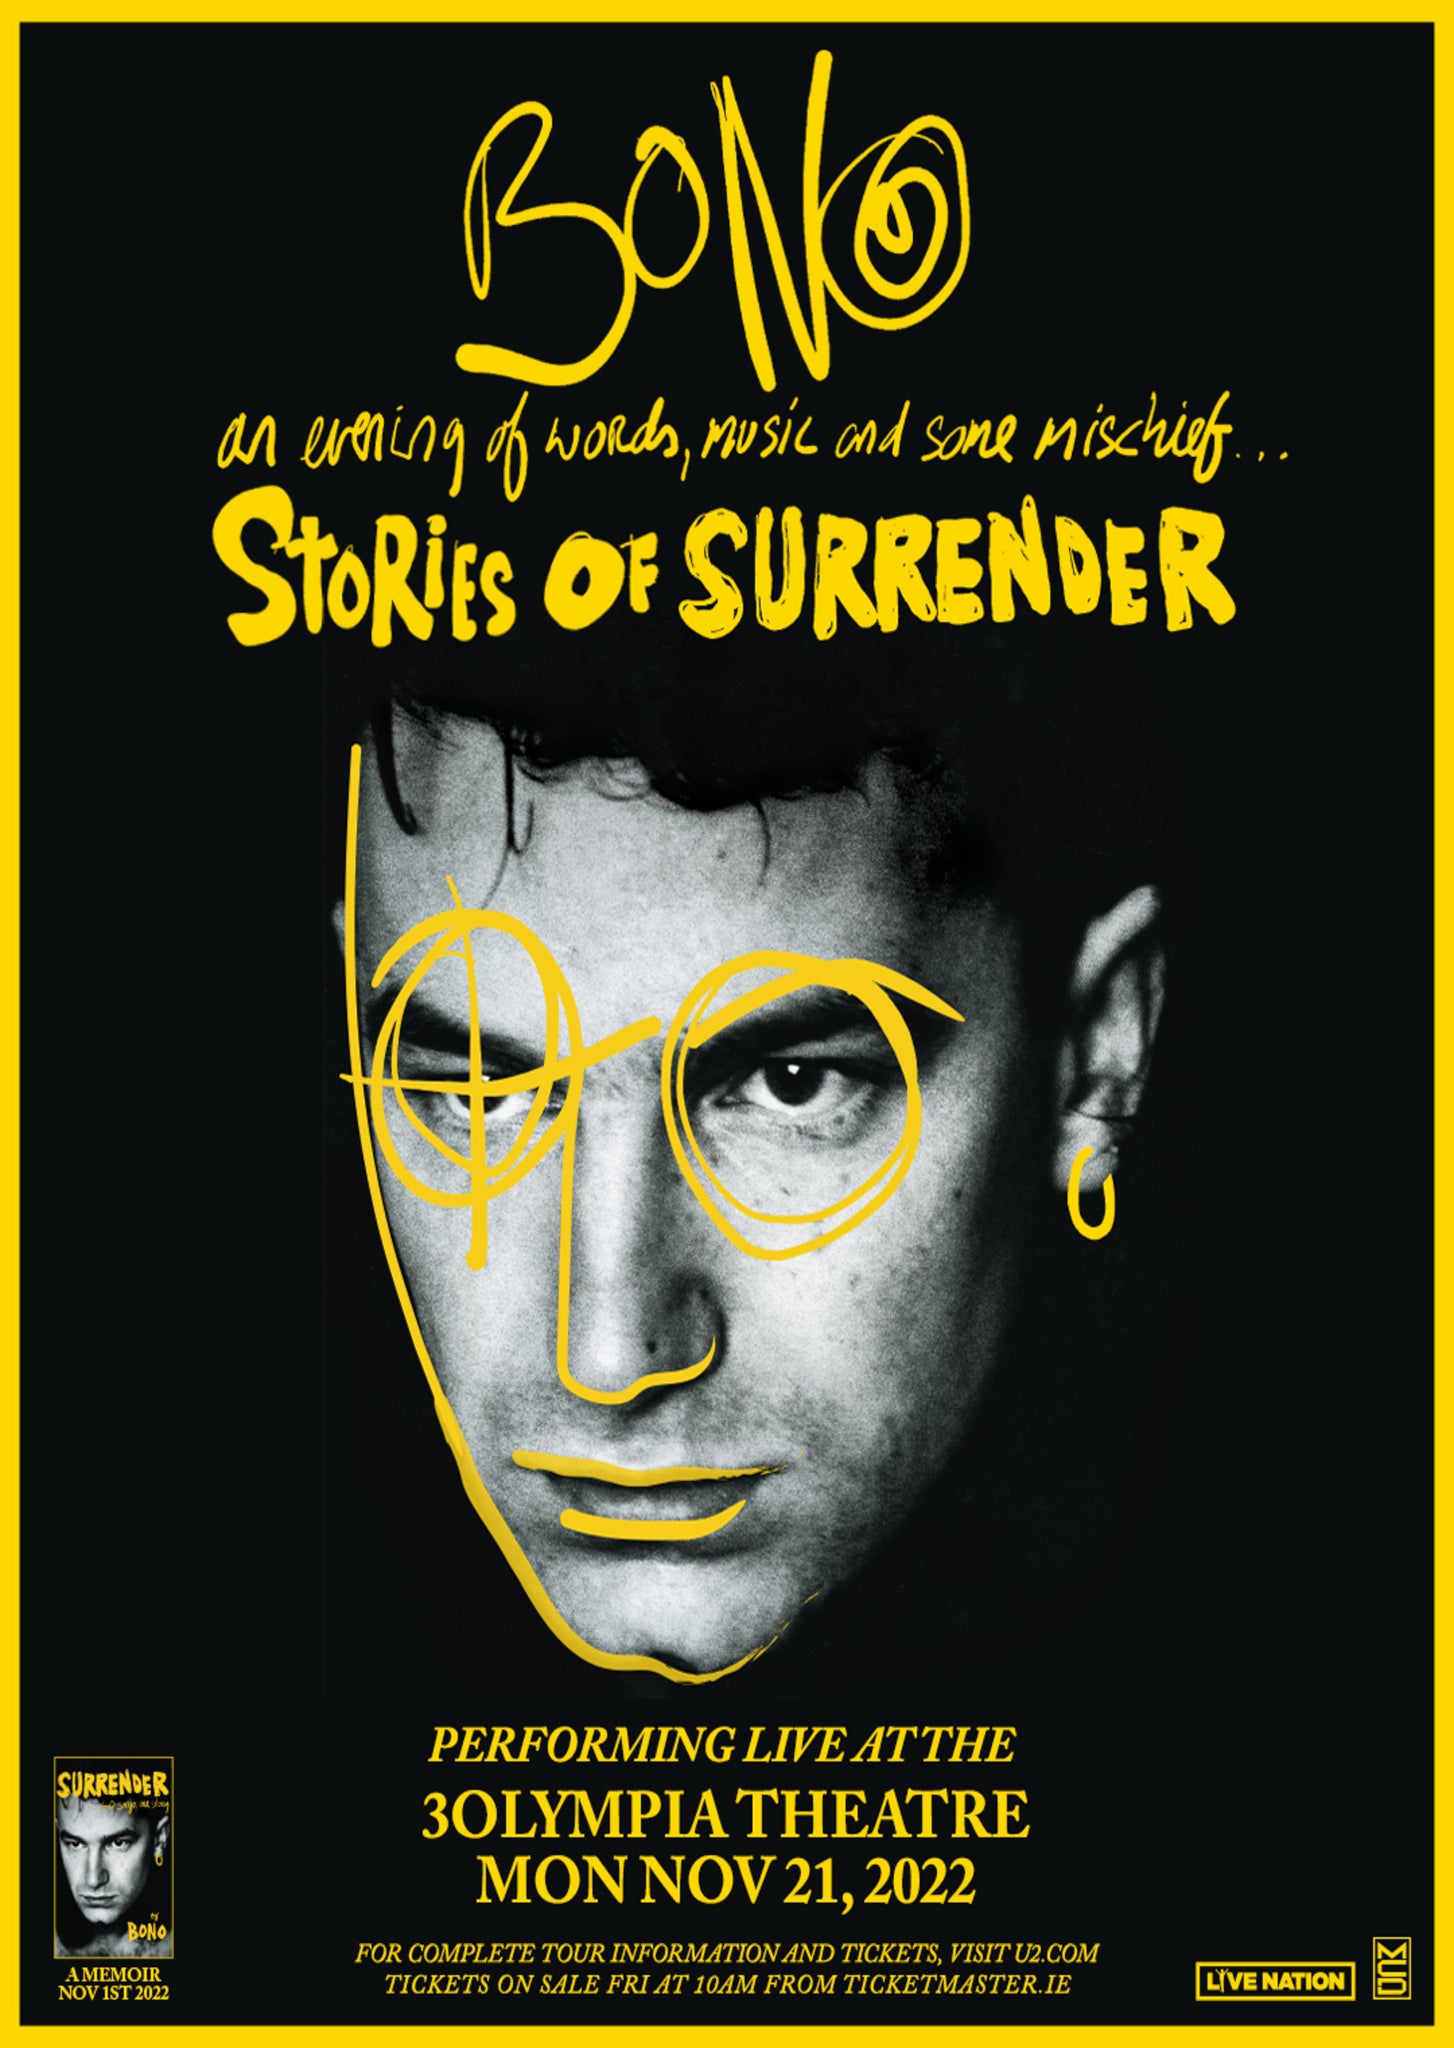 U2 - Bono - Stories of Surrender Dublin - A3 Poster